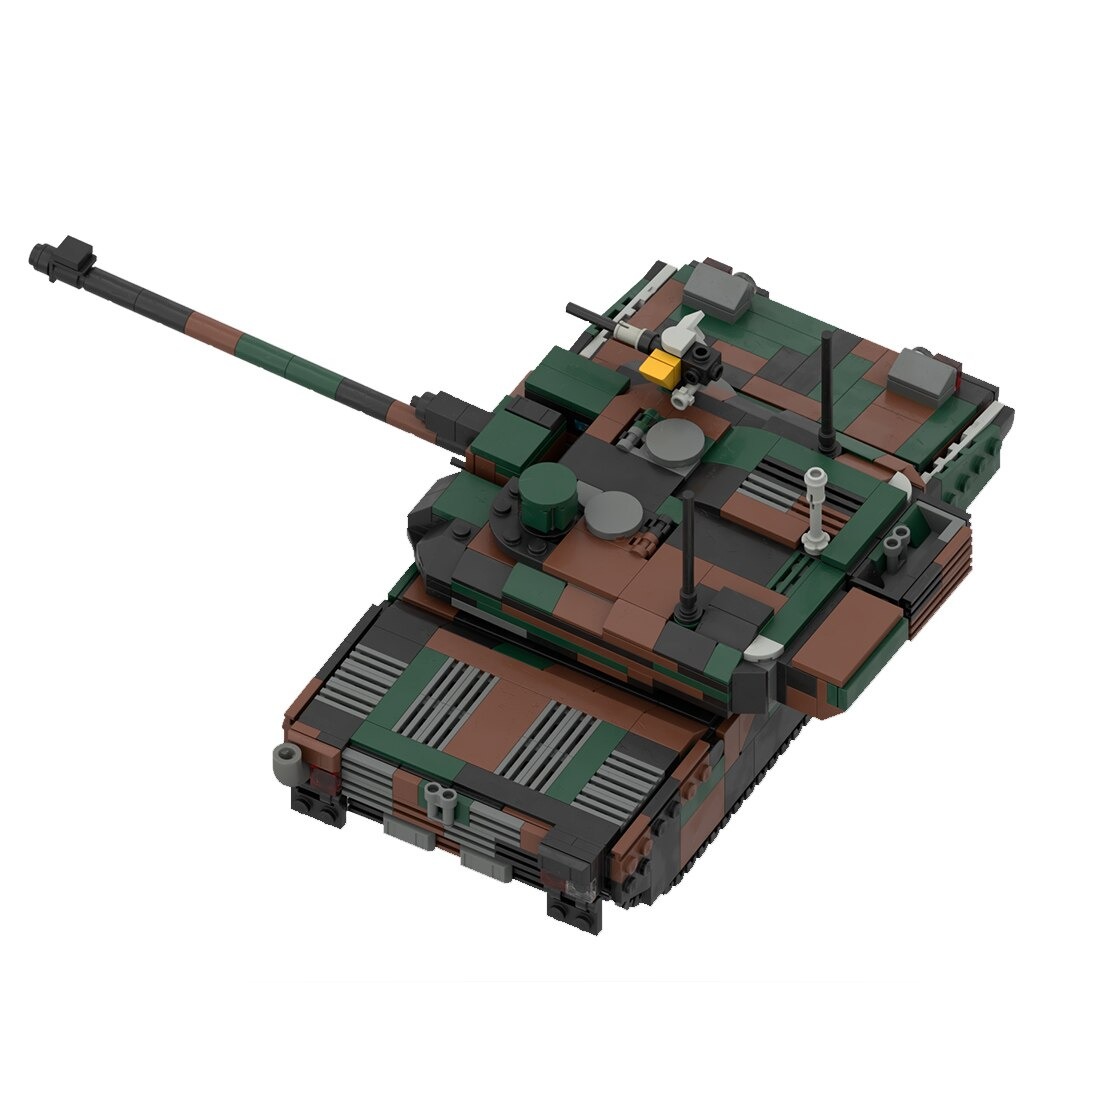 moc 34858 leclerc main battle tank model main 1 - KAZI Block